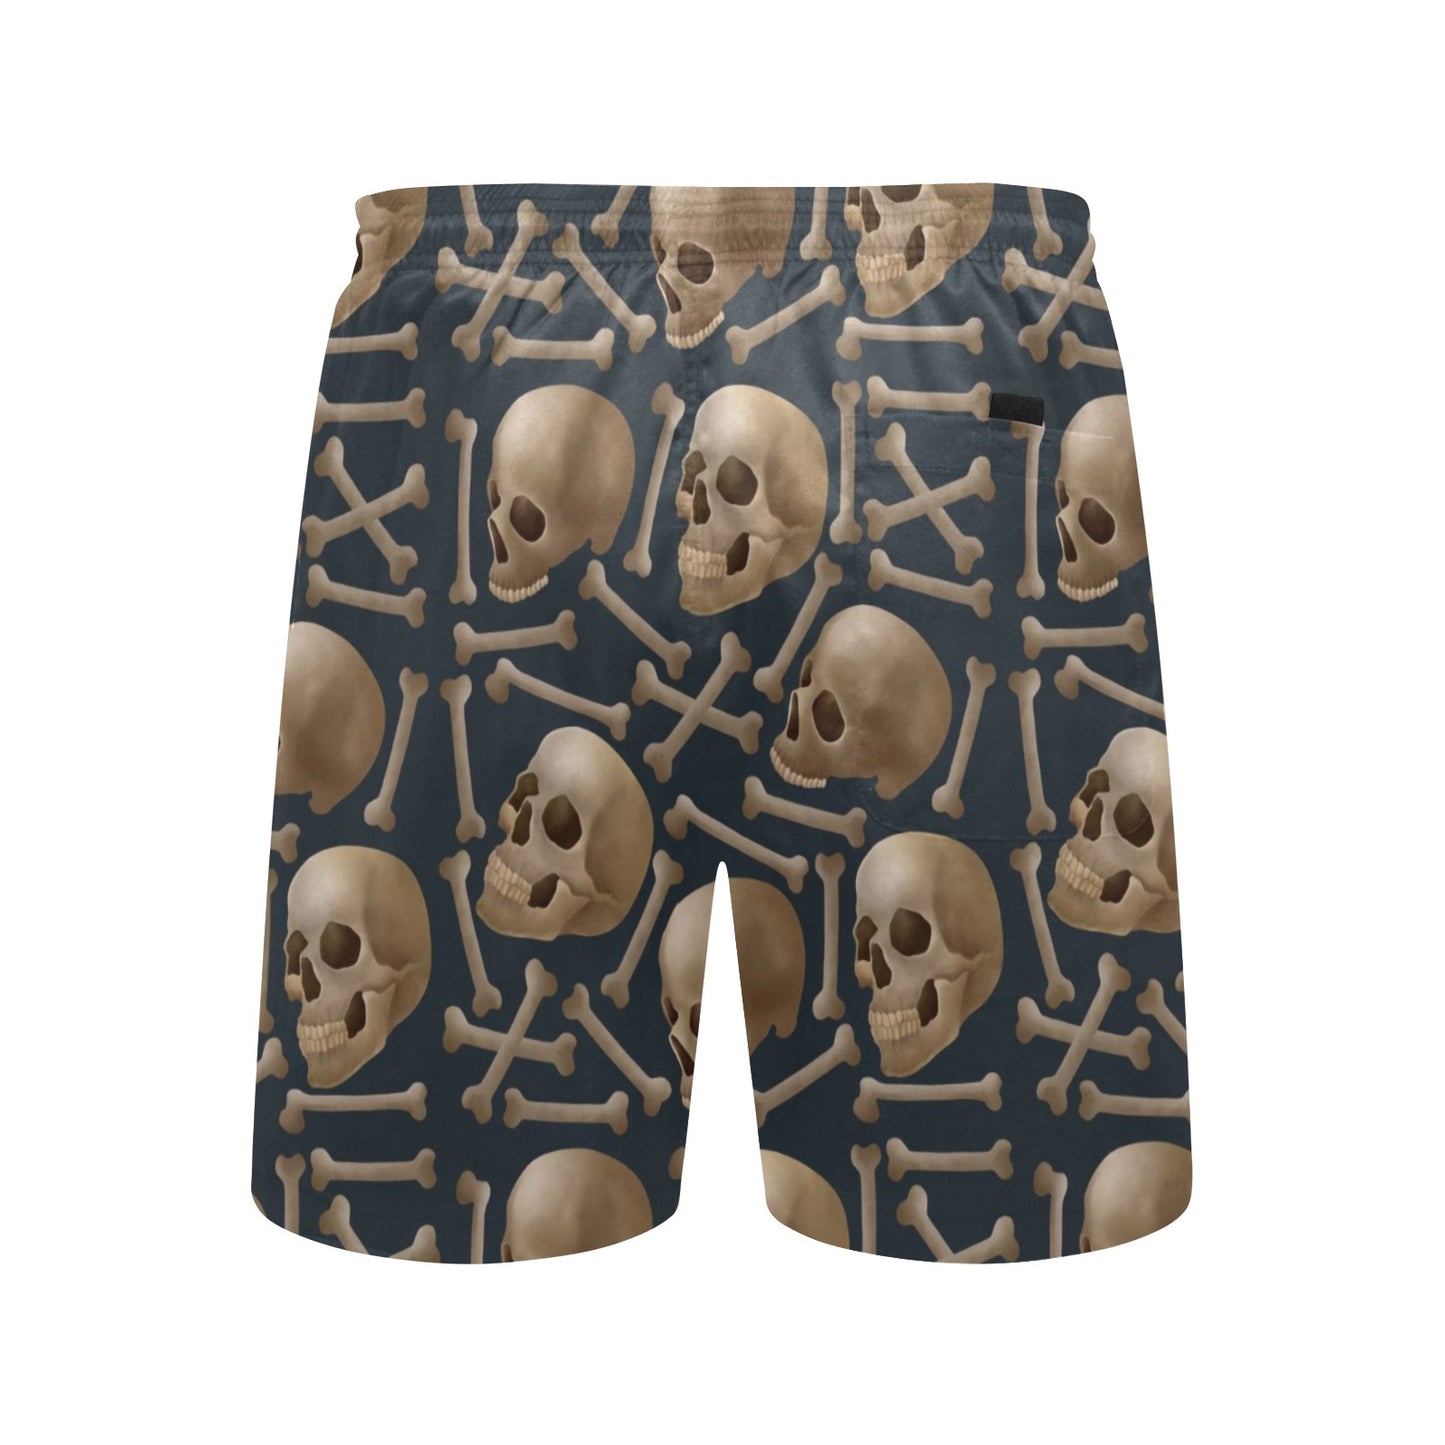 Skull And Bones Pattern Beach Shorts